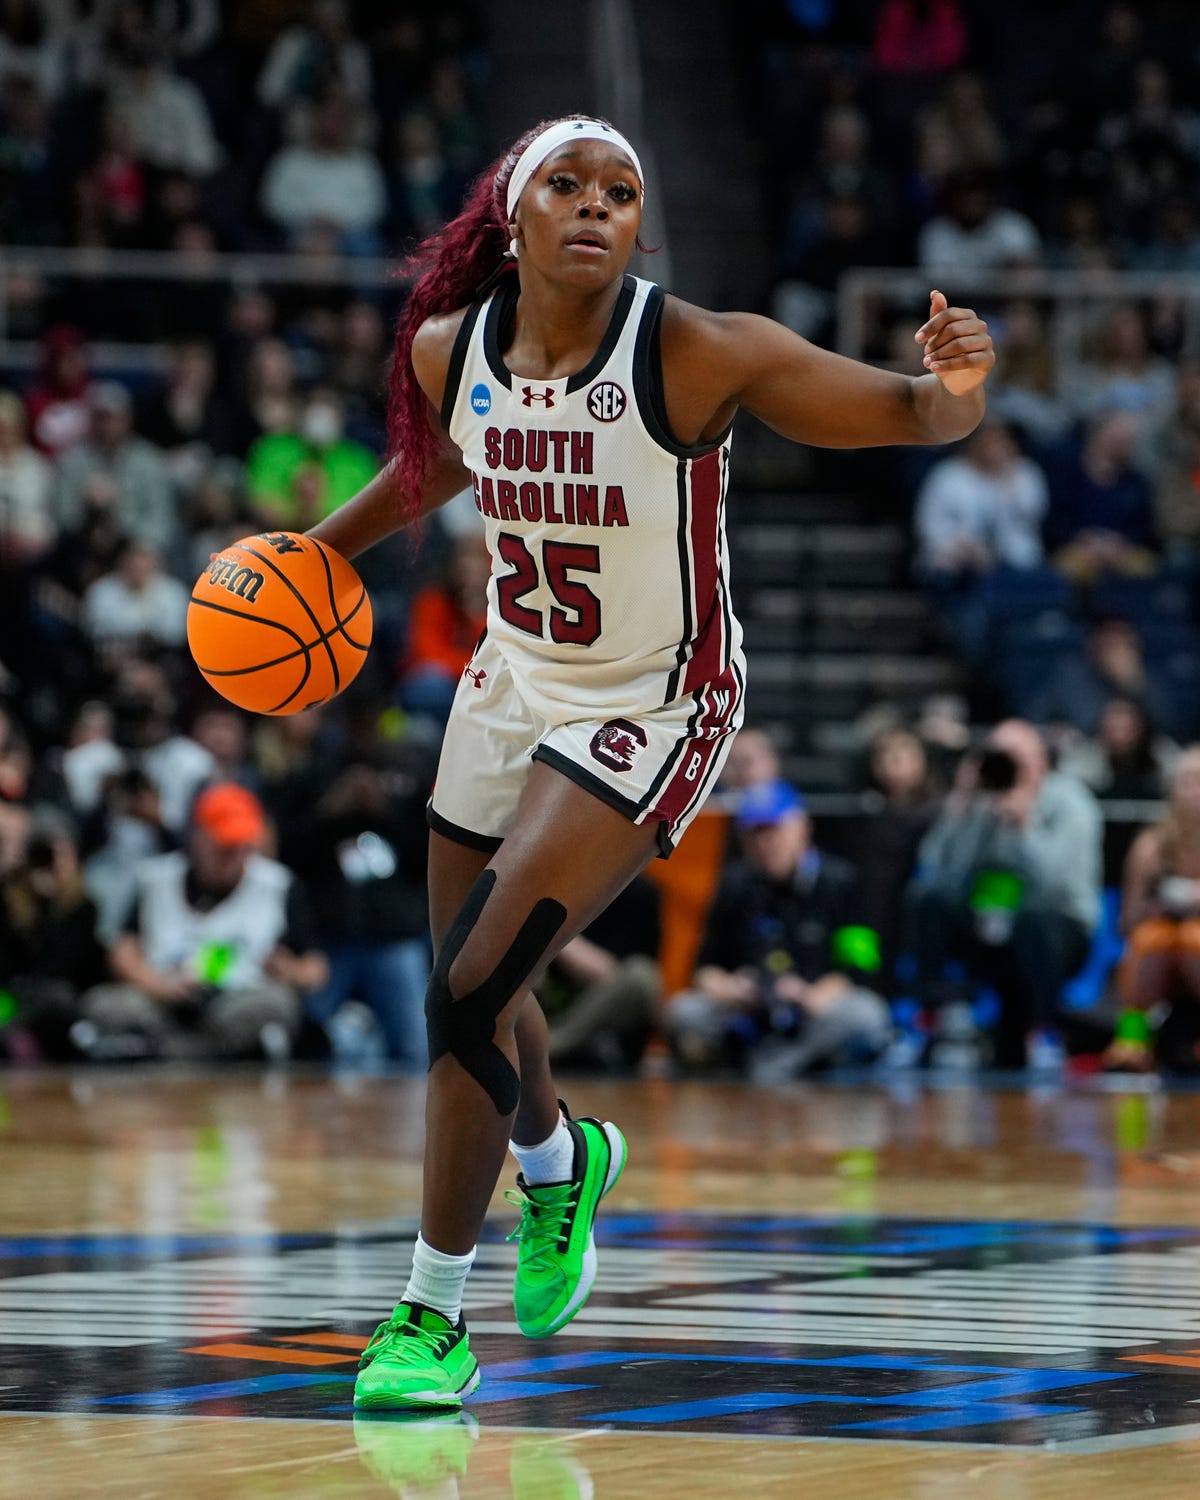 South Carolina women’s basketball’s Raven Johnson to have high school jersey retired